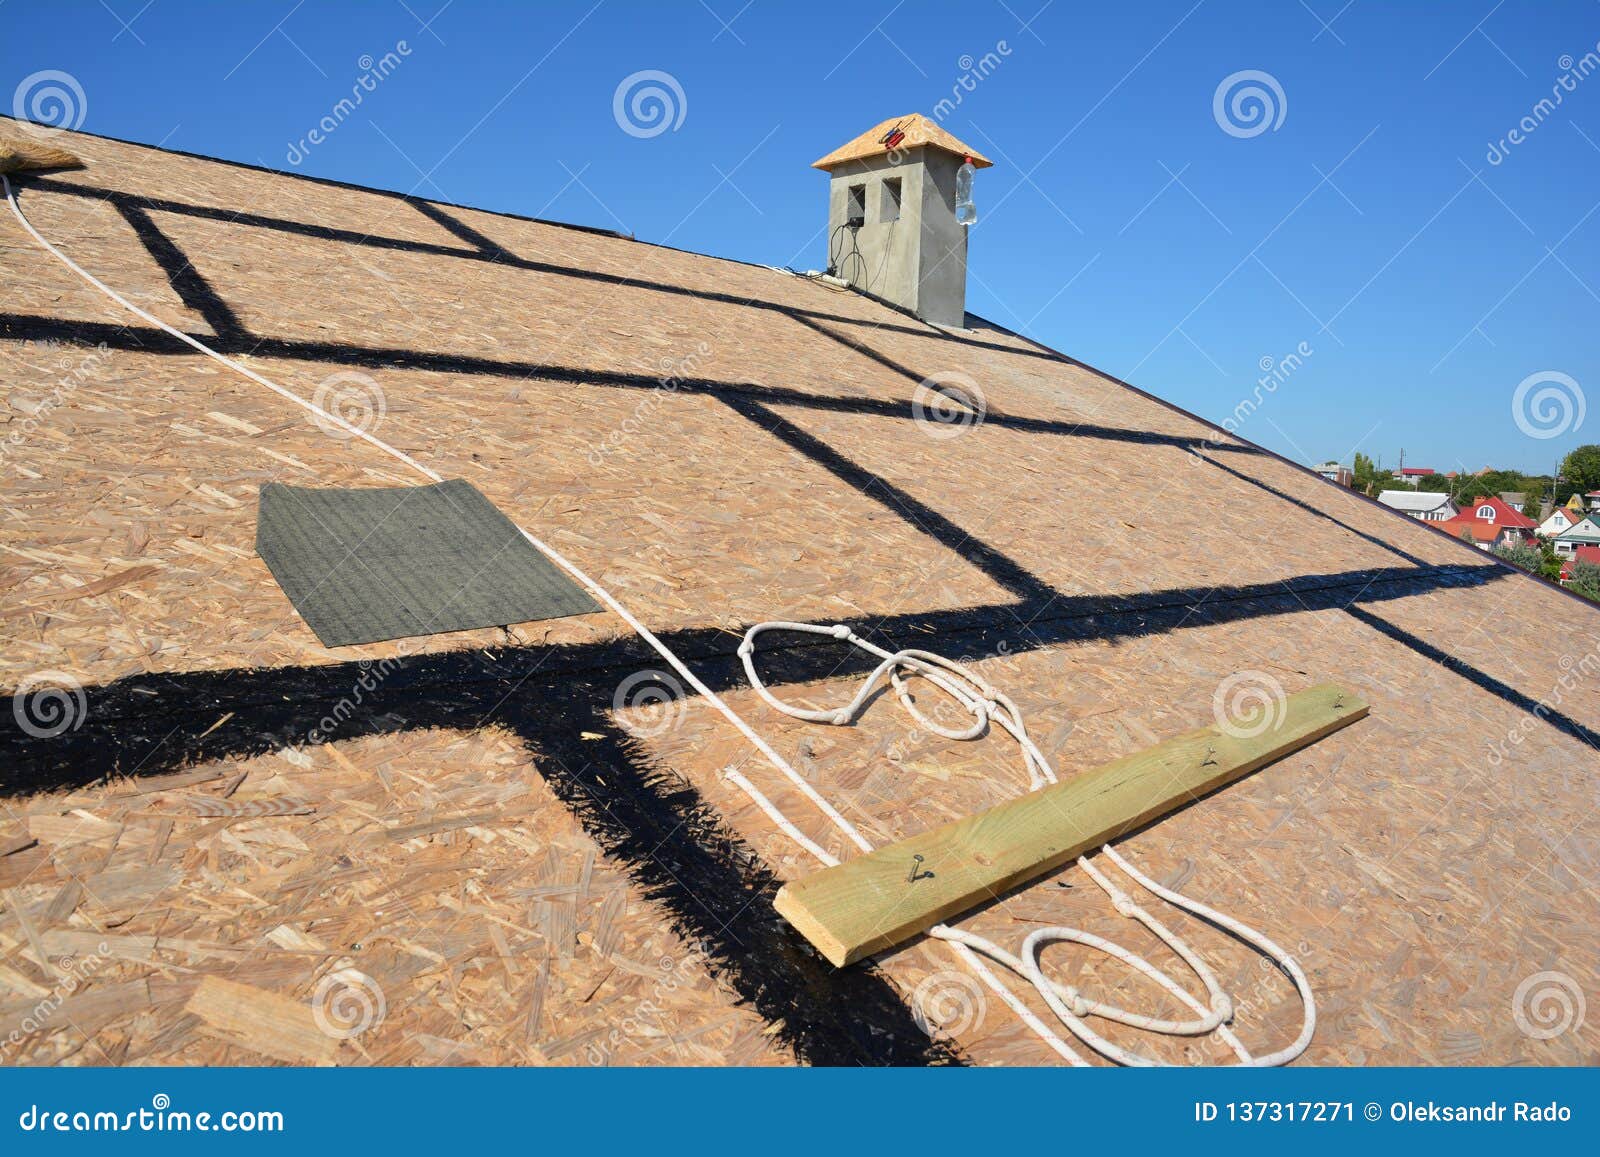 https://thumbs.dreamstime.com/z/roofing-preparation-asphalt-shingles-installing-house-construction-wooden-roof-bitumen-spray-protection-rope-safety-137317271.jpg